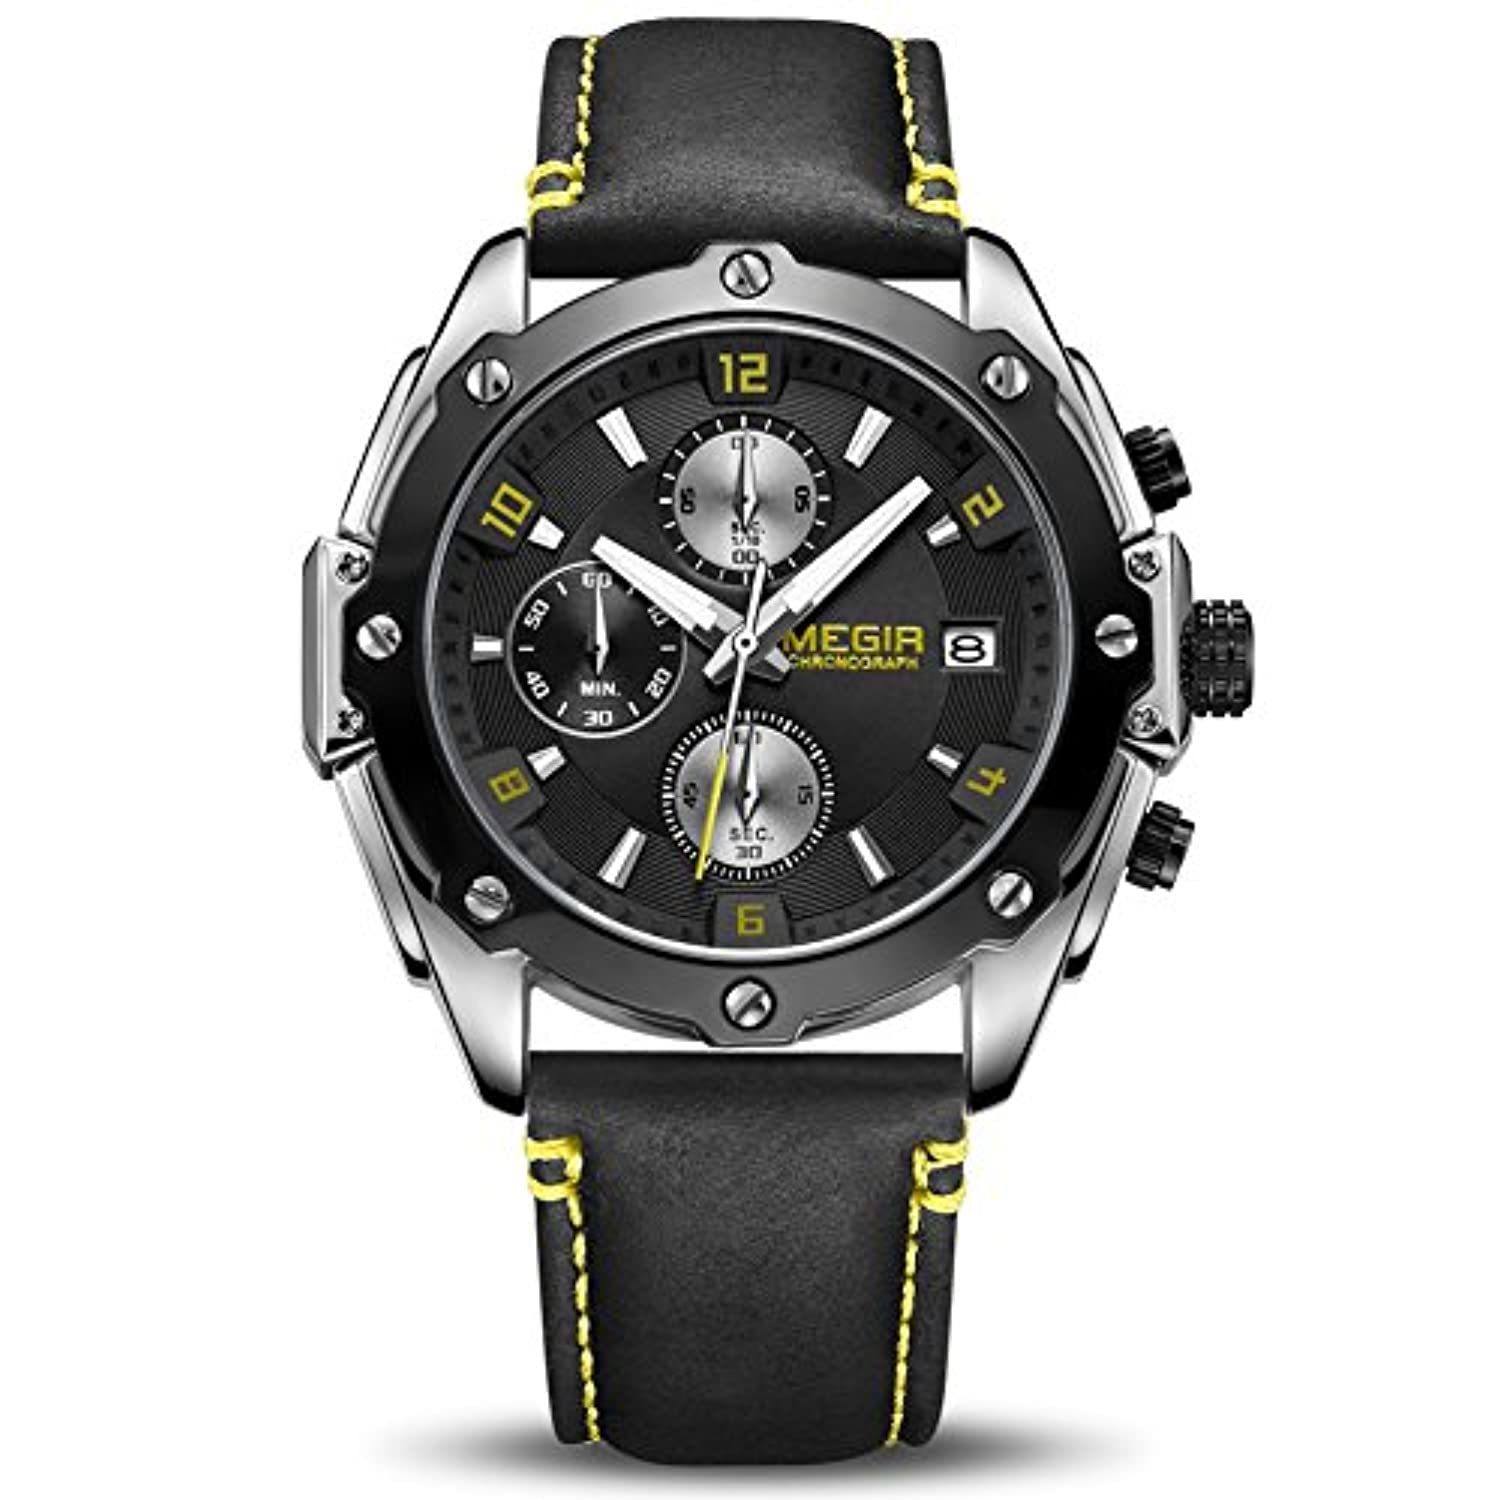 Racing Watch Black Yellow